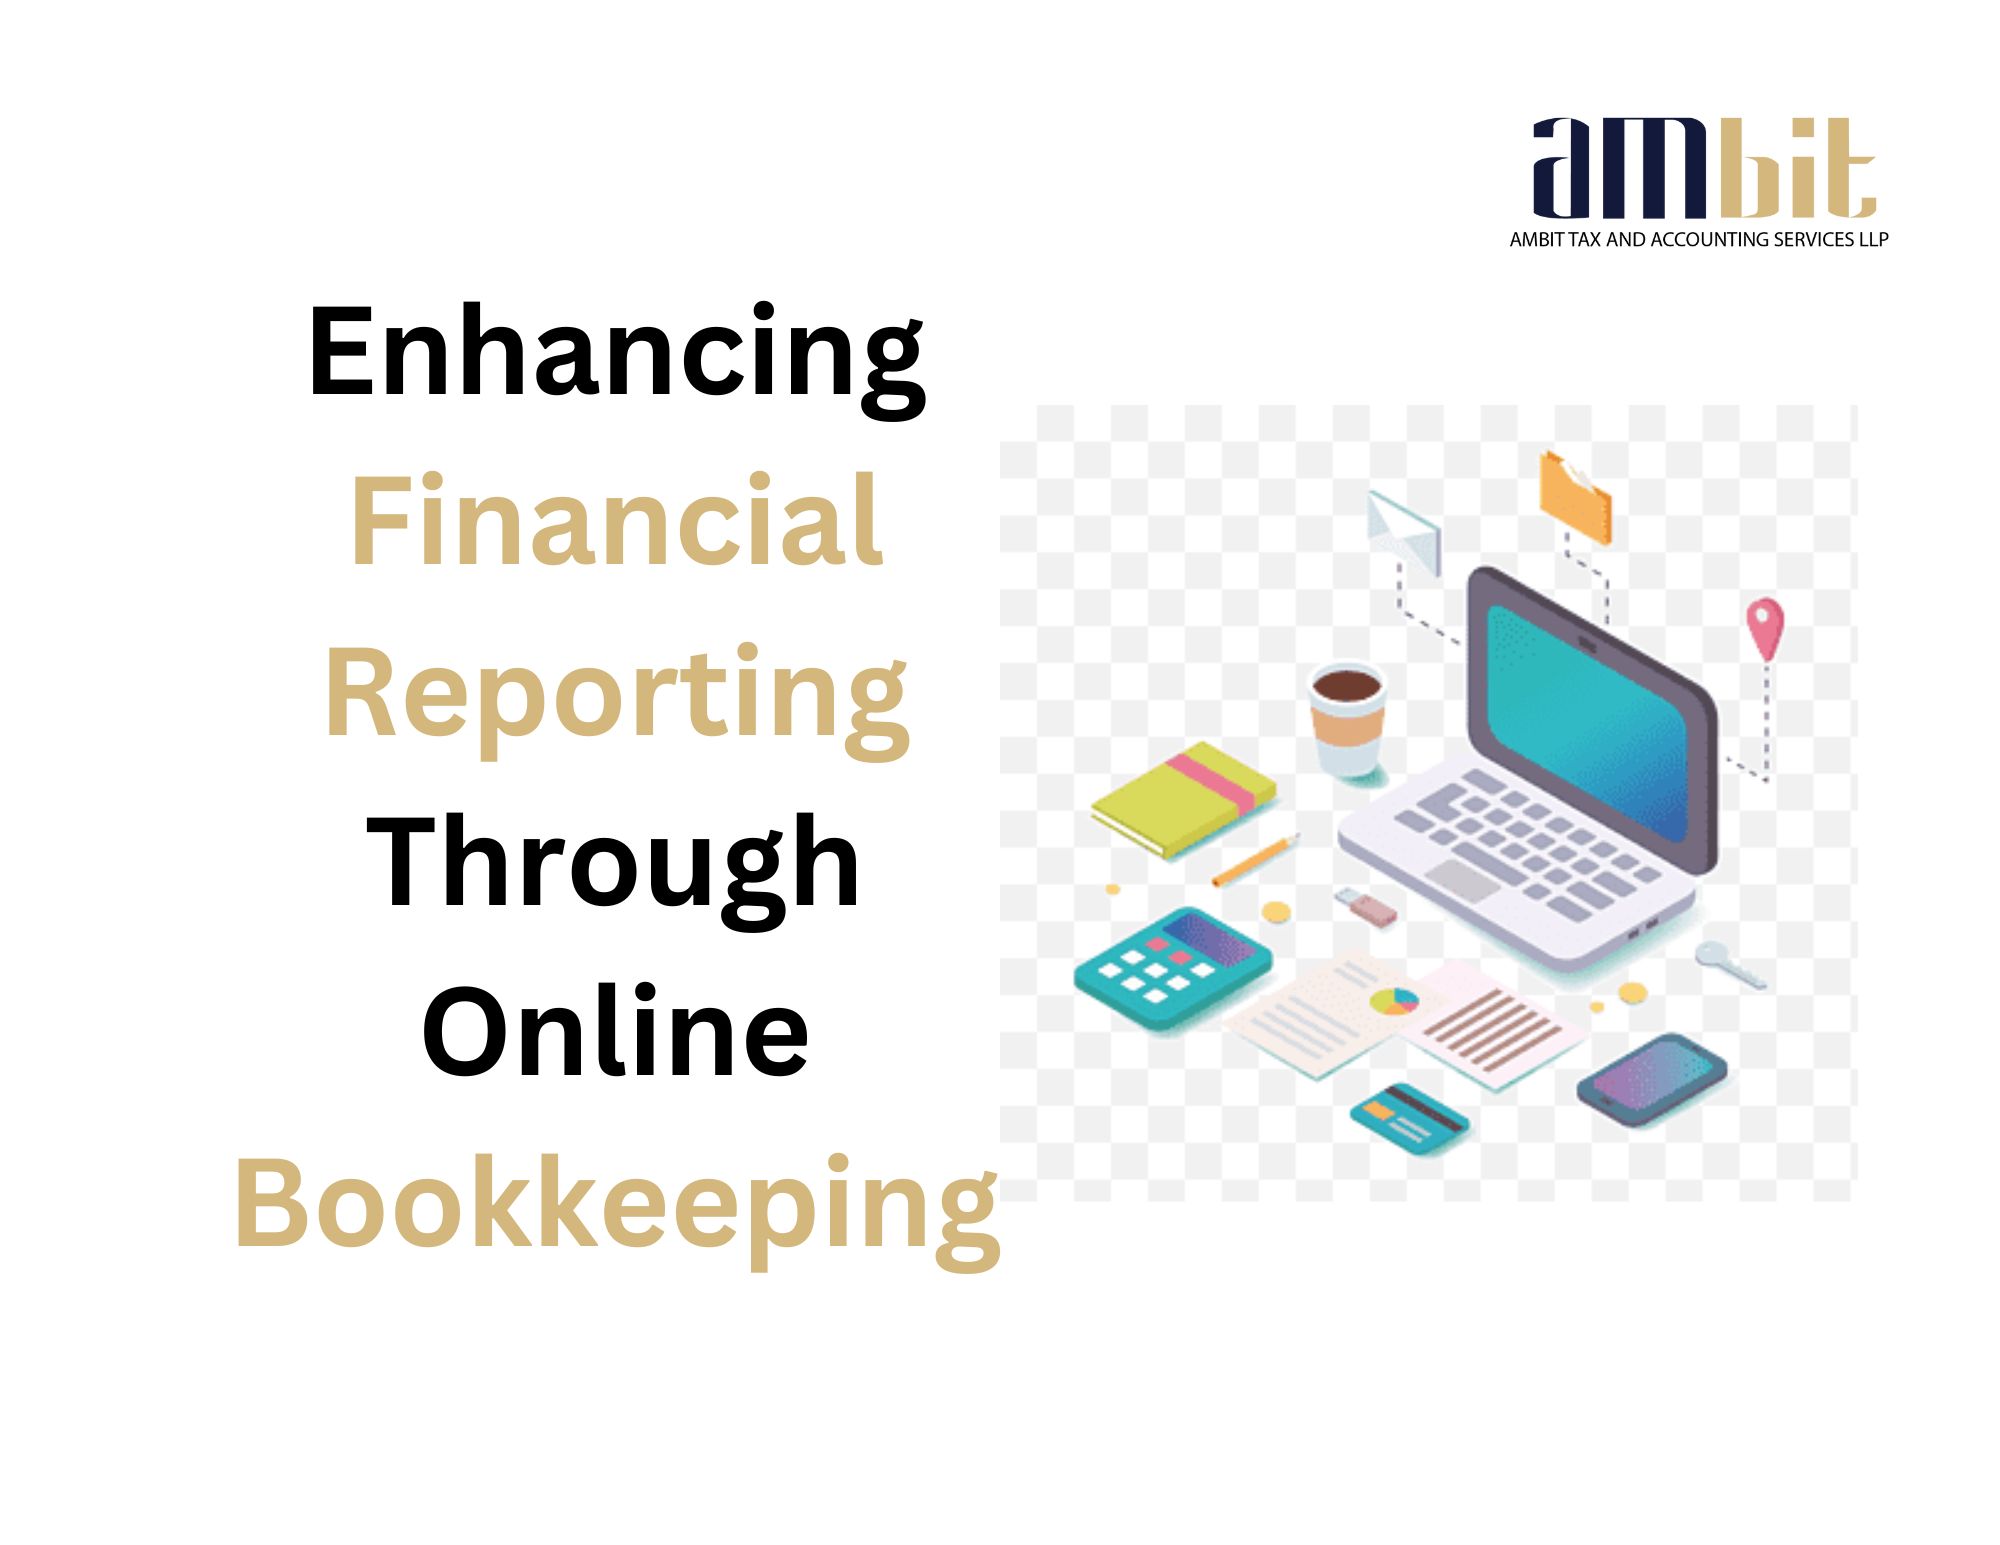  Enhancing Financial Reporting Through Online Bookkeeping